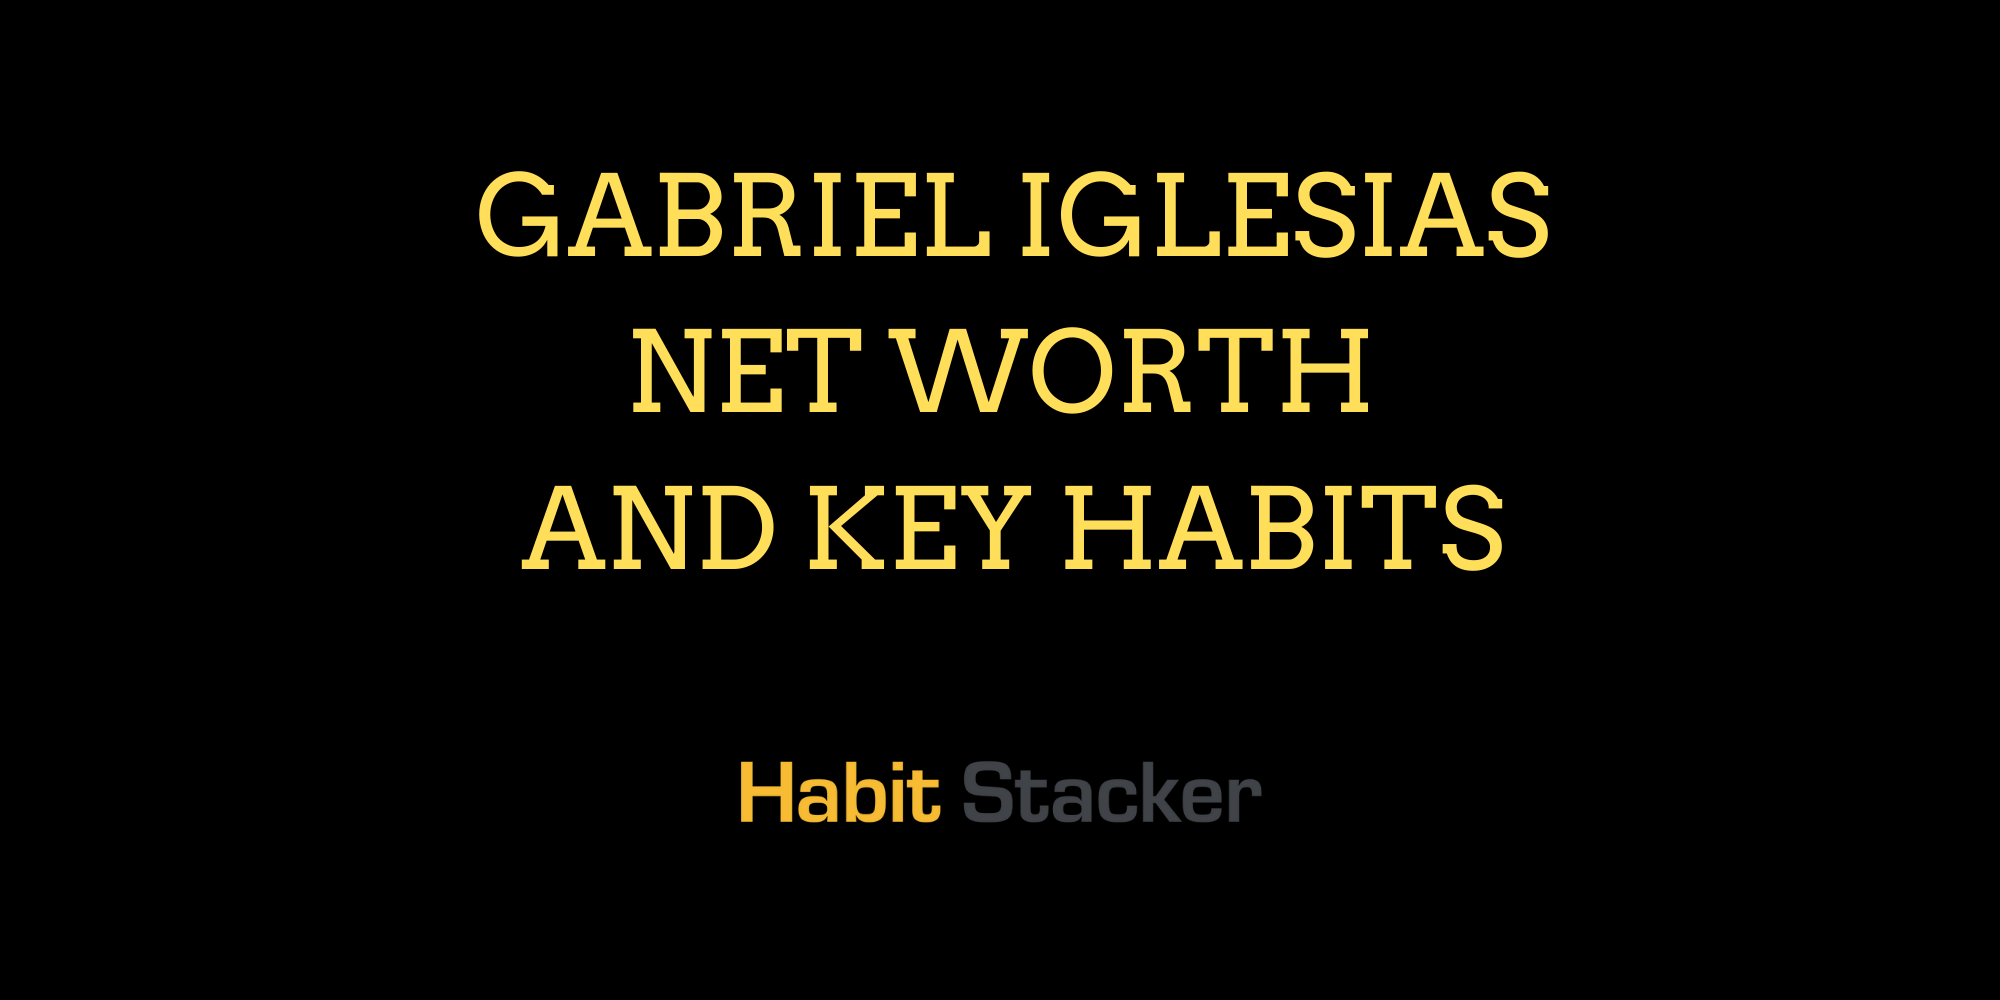 Gabriel Iglesias Net Worth And Key Habits Habit Stacker